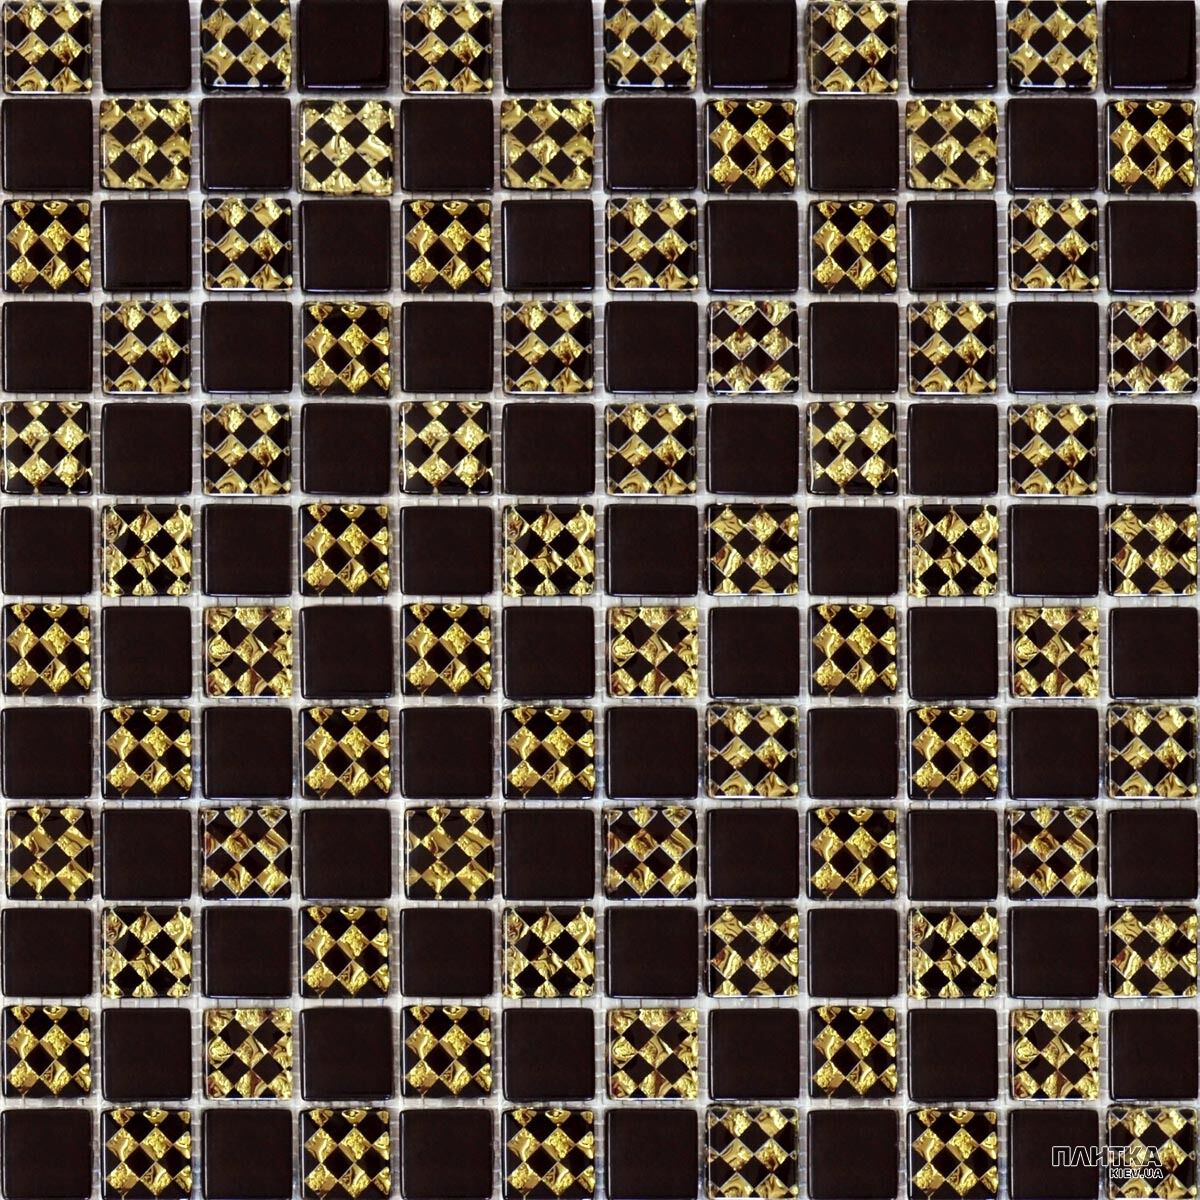 Мозаика Grand Kerama 806 Шахматка шоколад-ромб золото шоколад,золотой